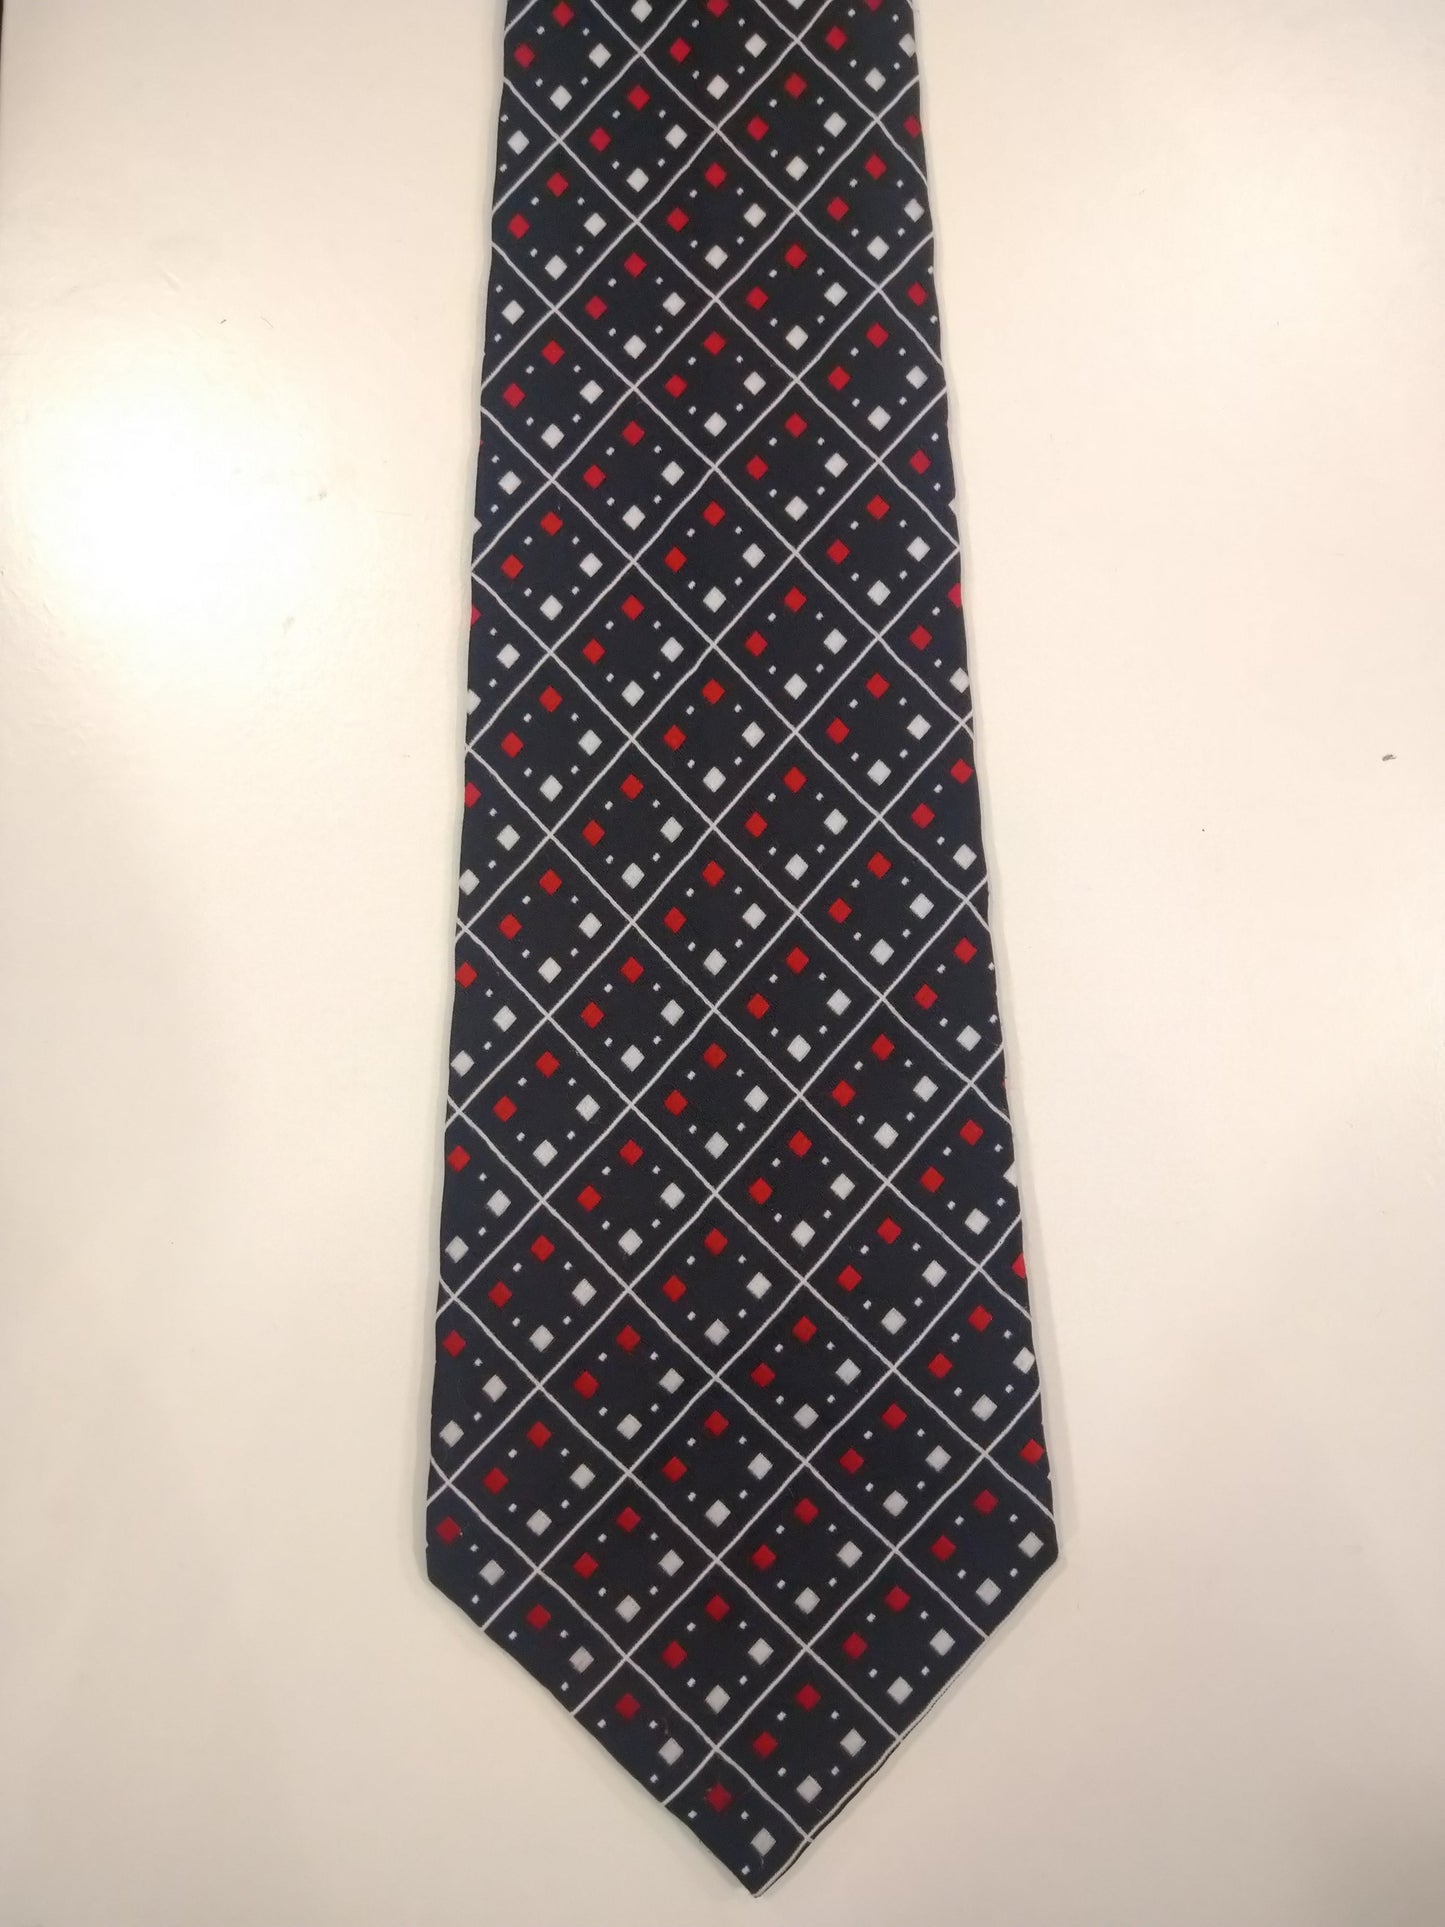 Altio Amsterdam Super Vintage Extra wide polyester tie. Black red white balls motif.